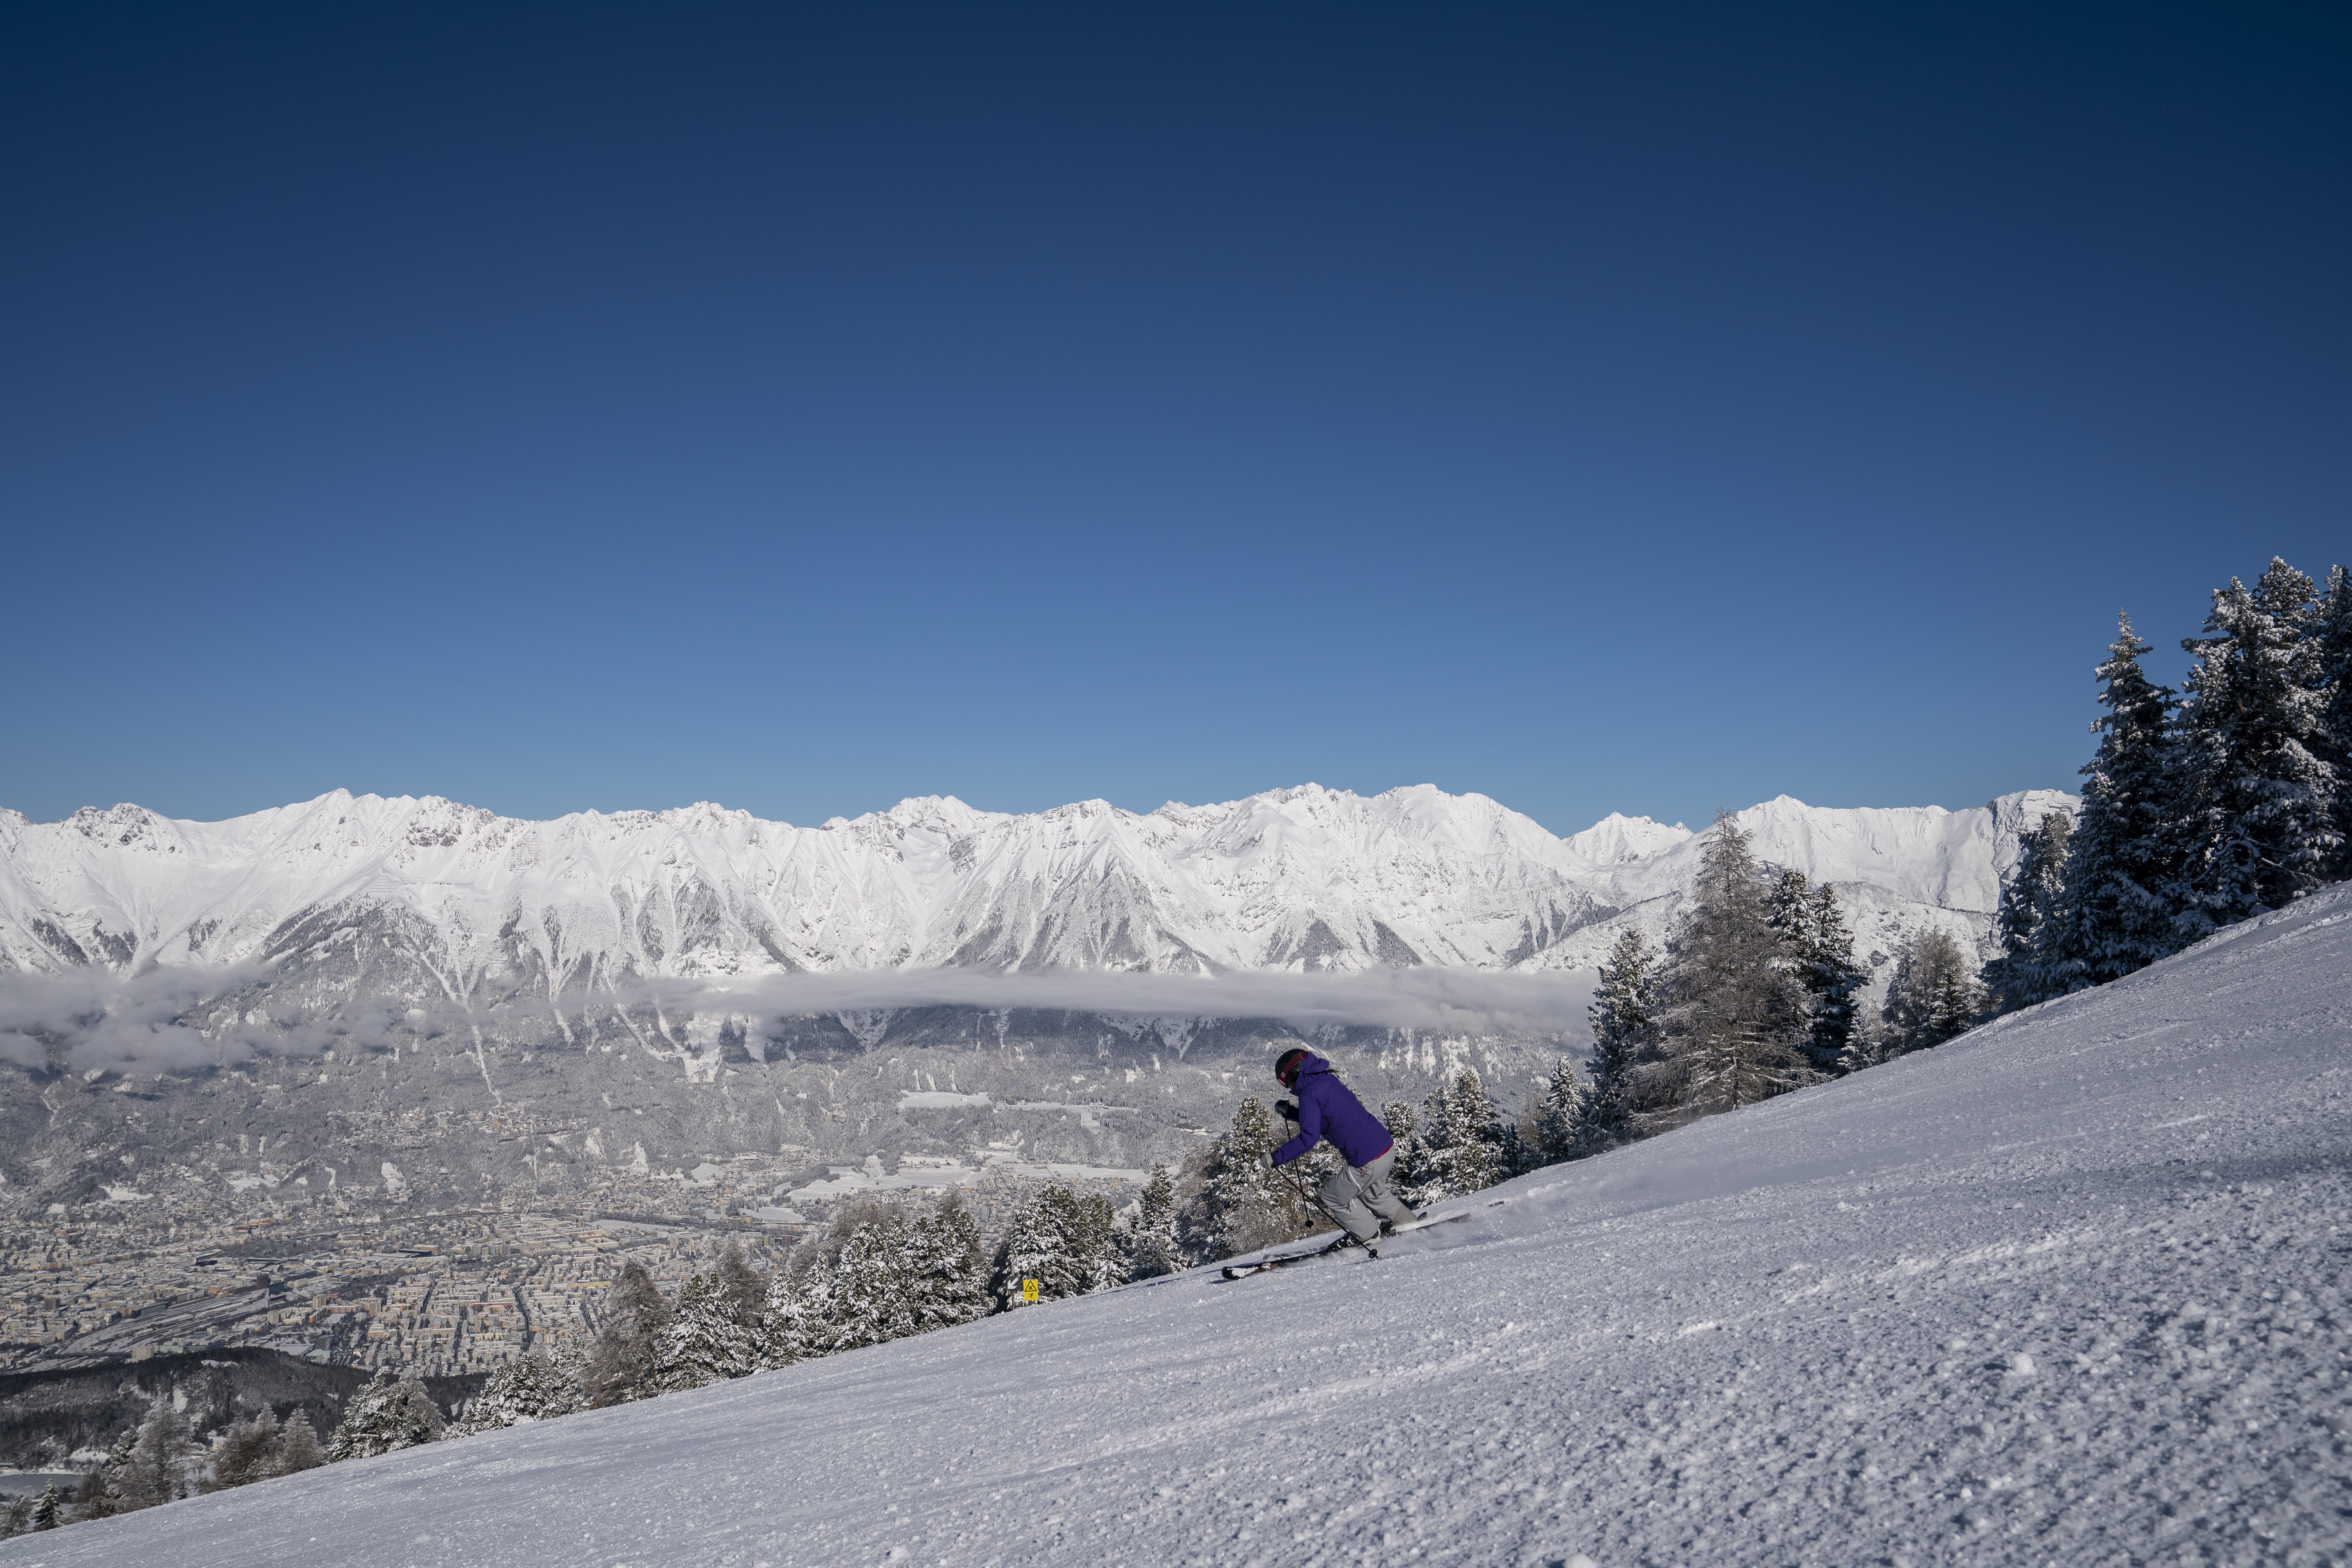 Off piste skiing: 10 ways to improve